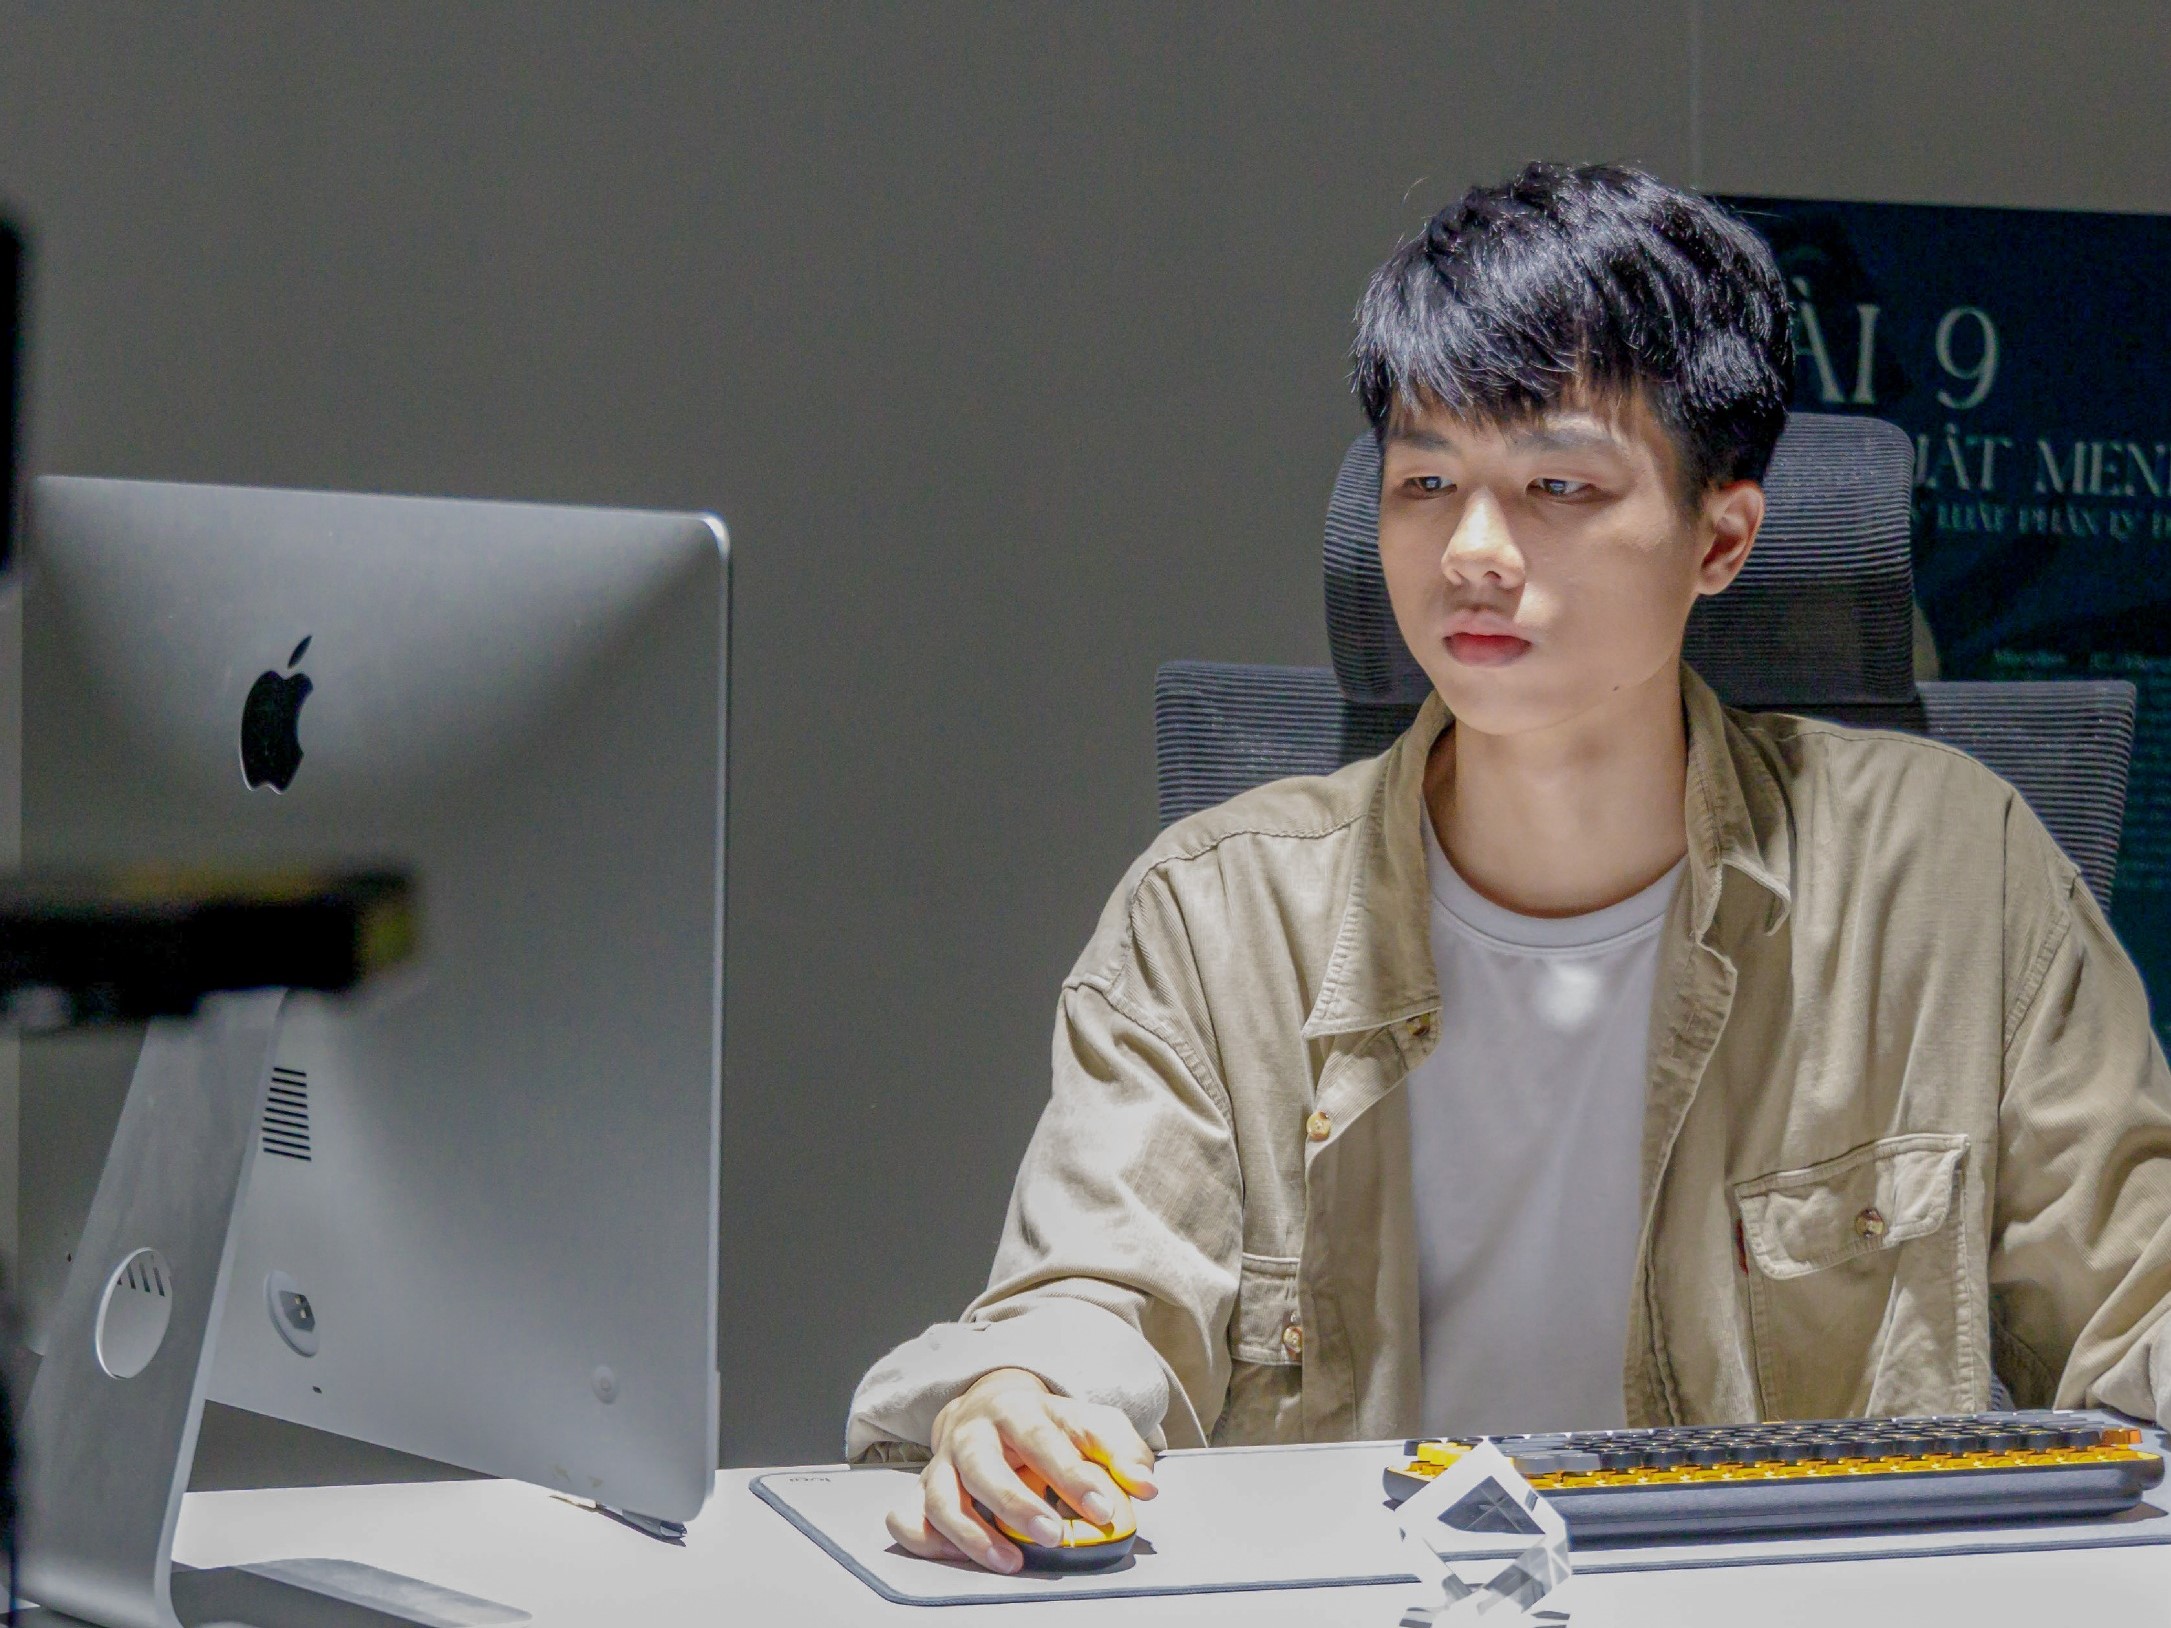 Bao working at a computer